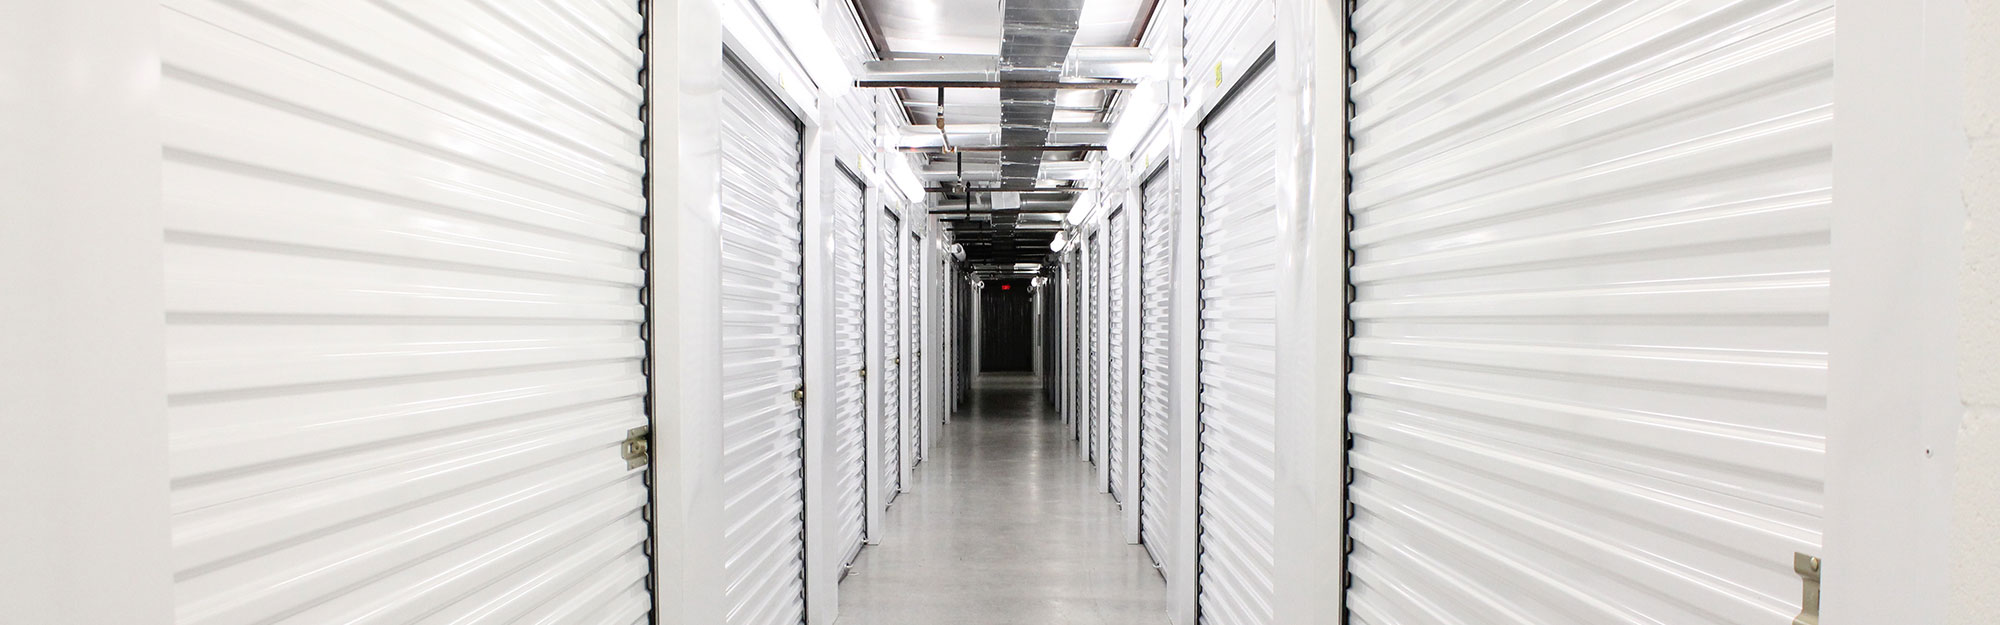 Self-storage Facilities In Michigan